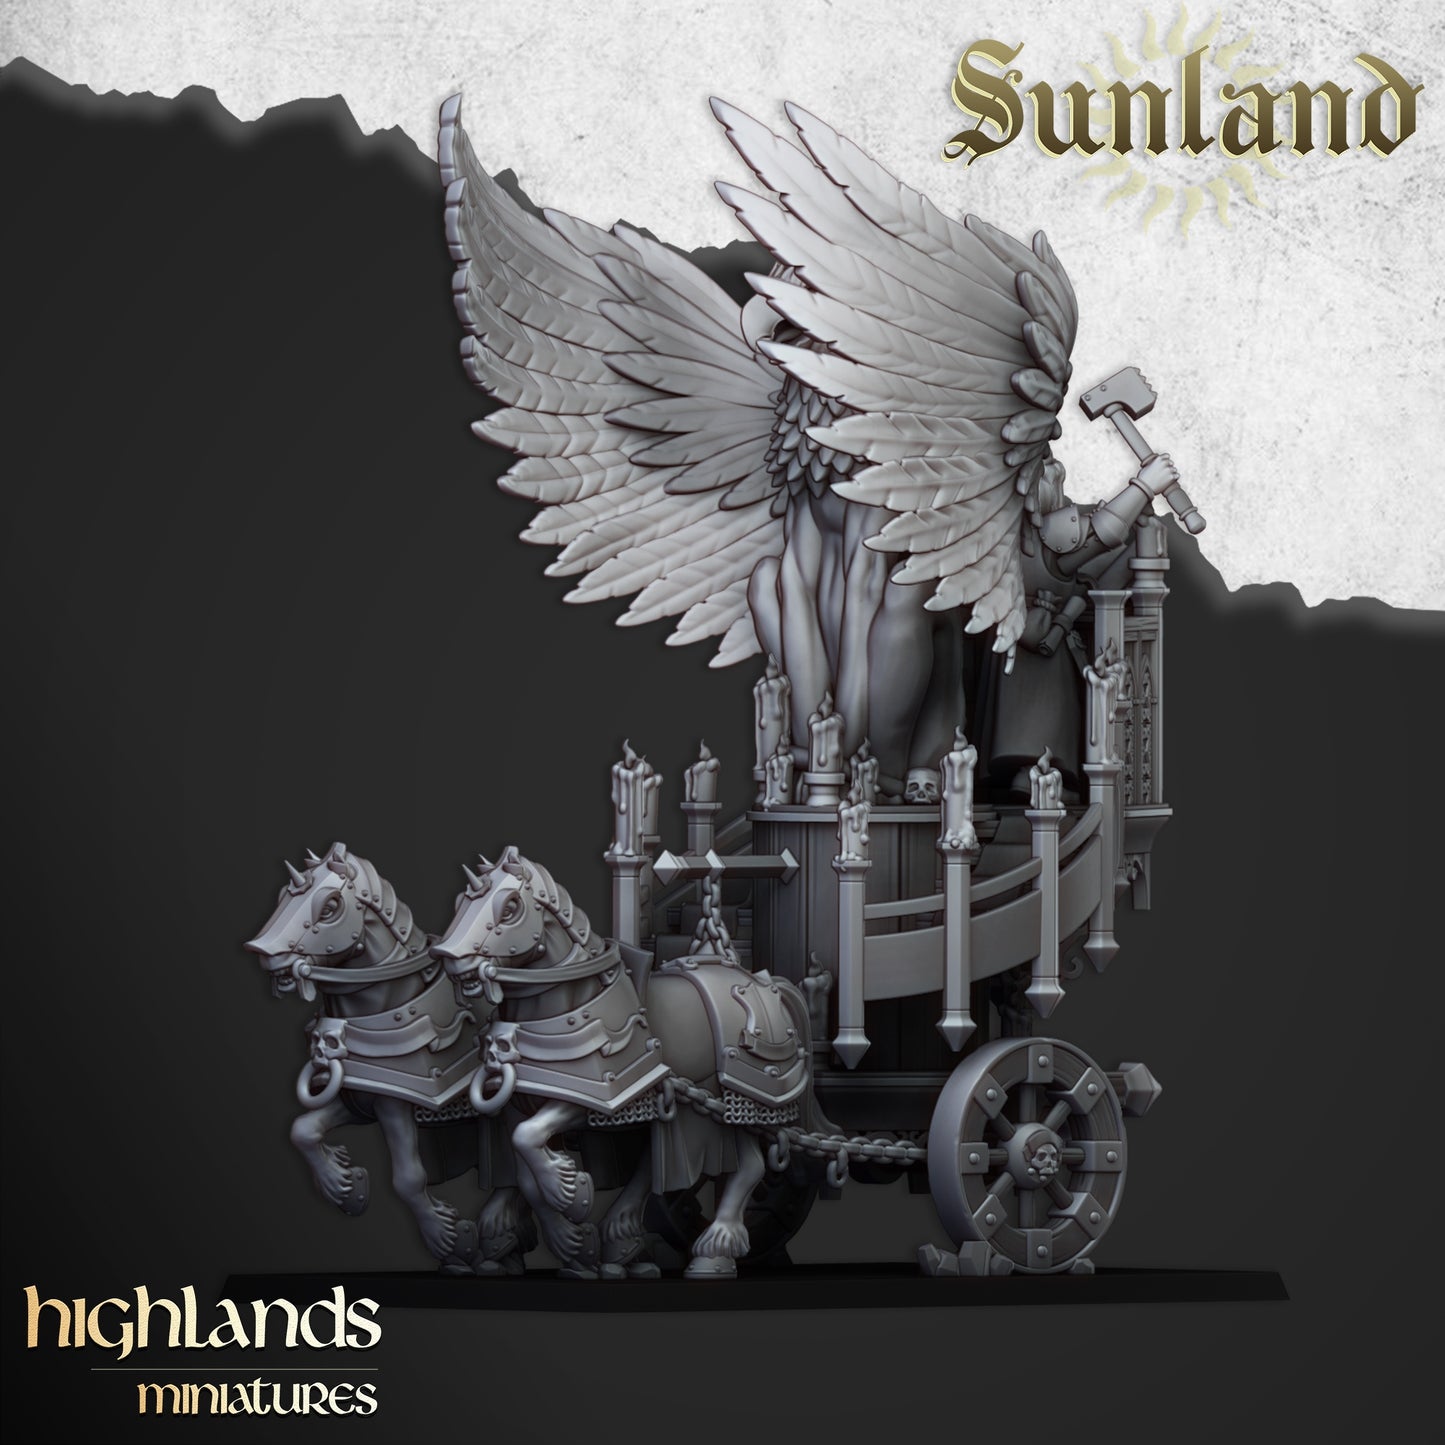 Sunland Altar Wagon from Highlands Miniatures